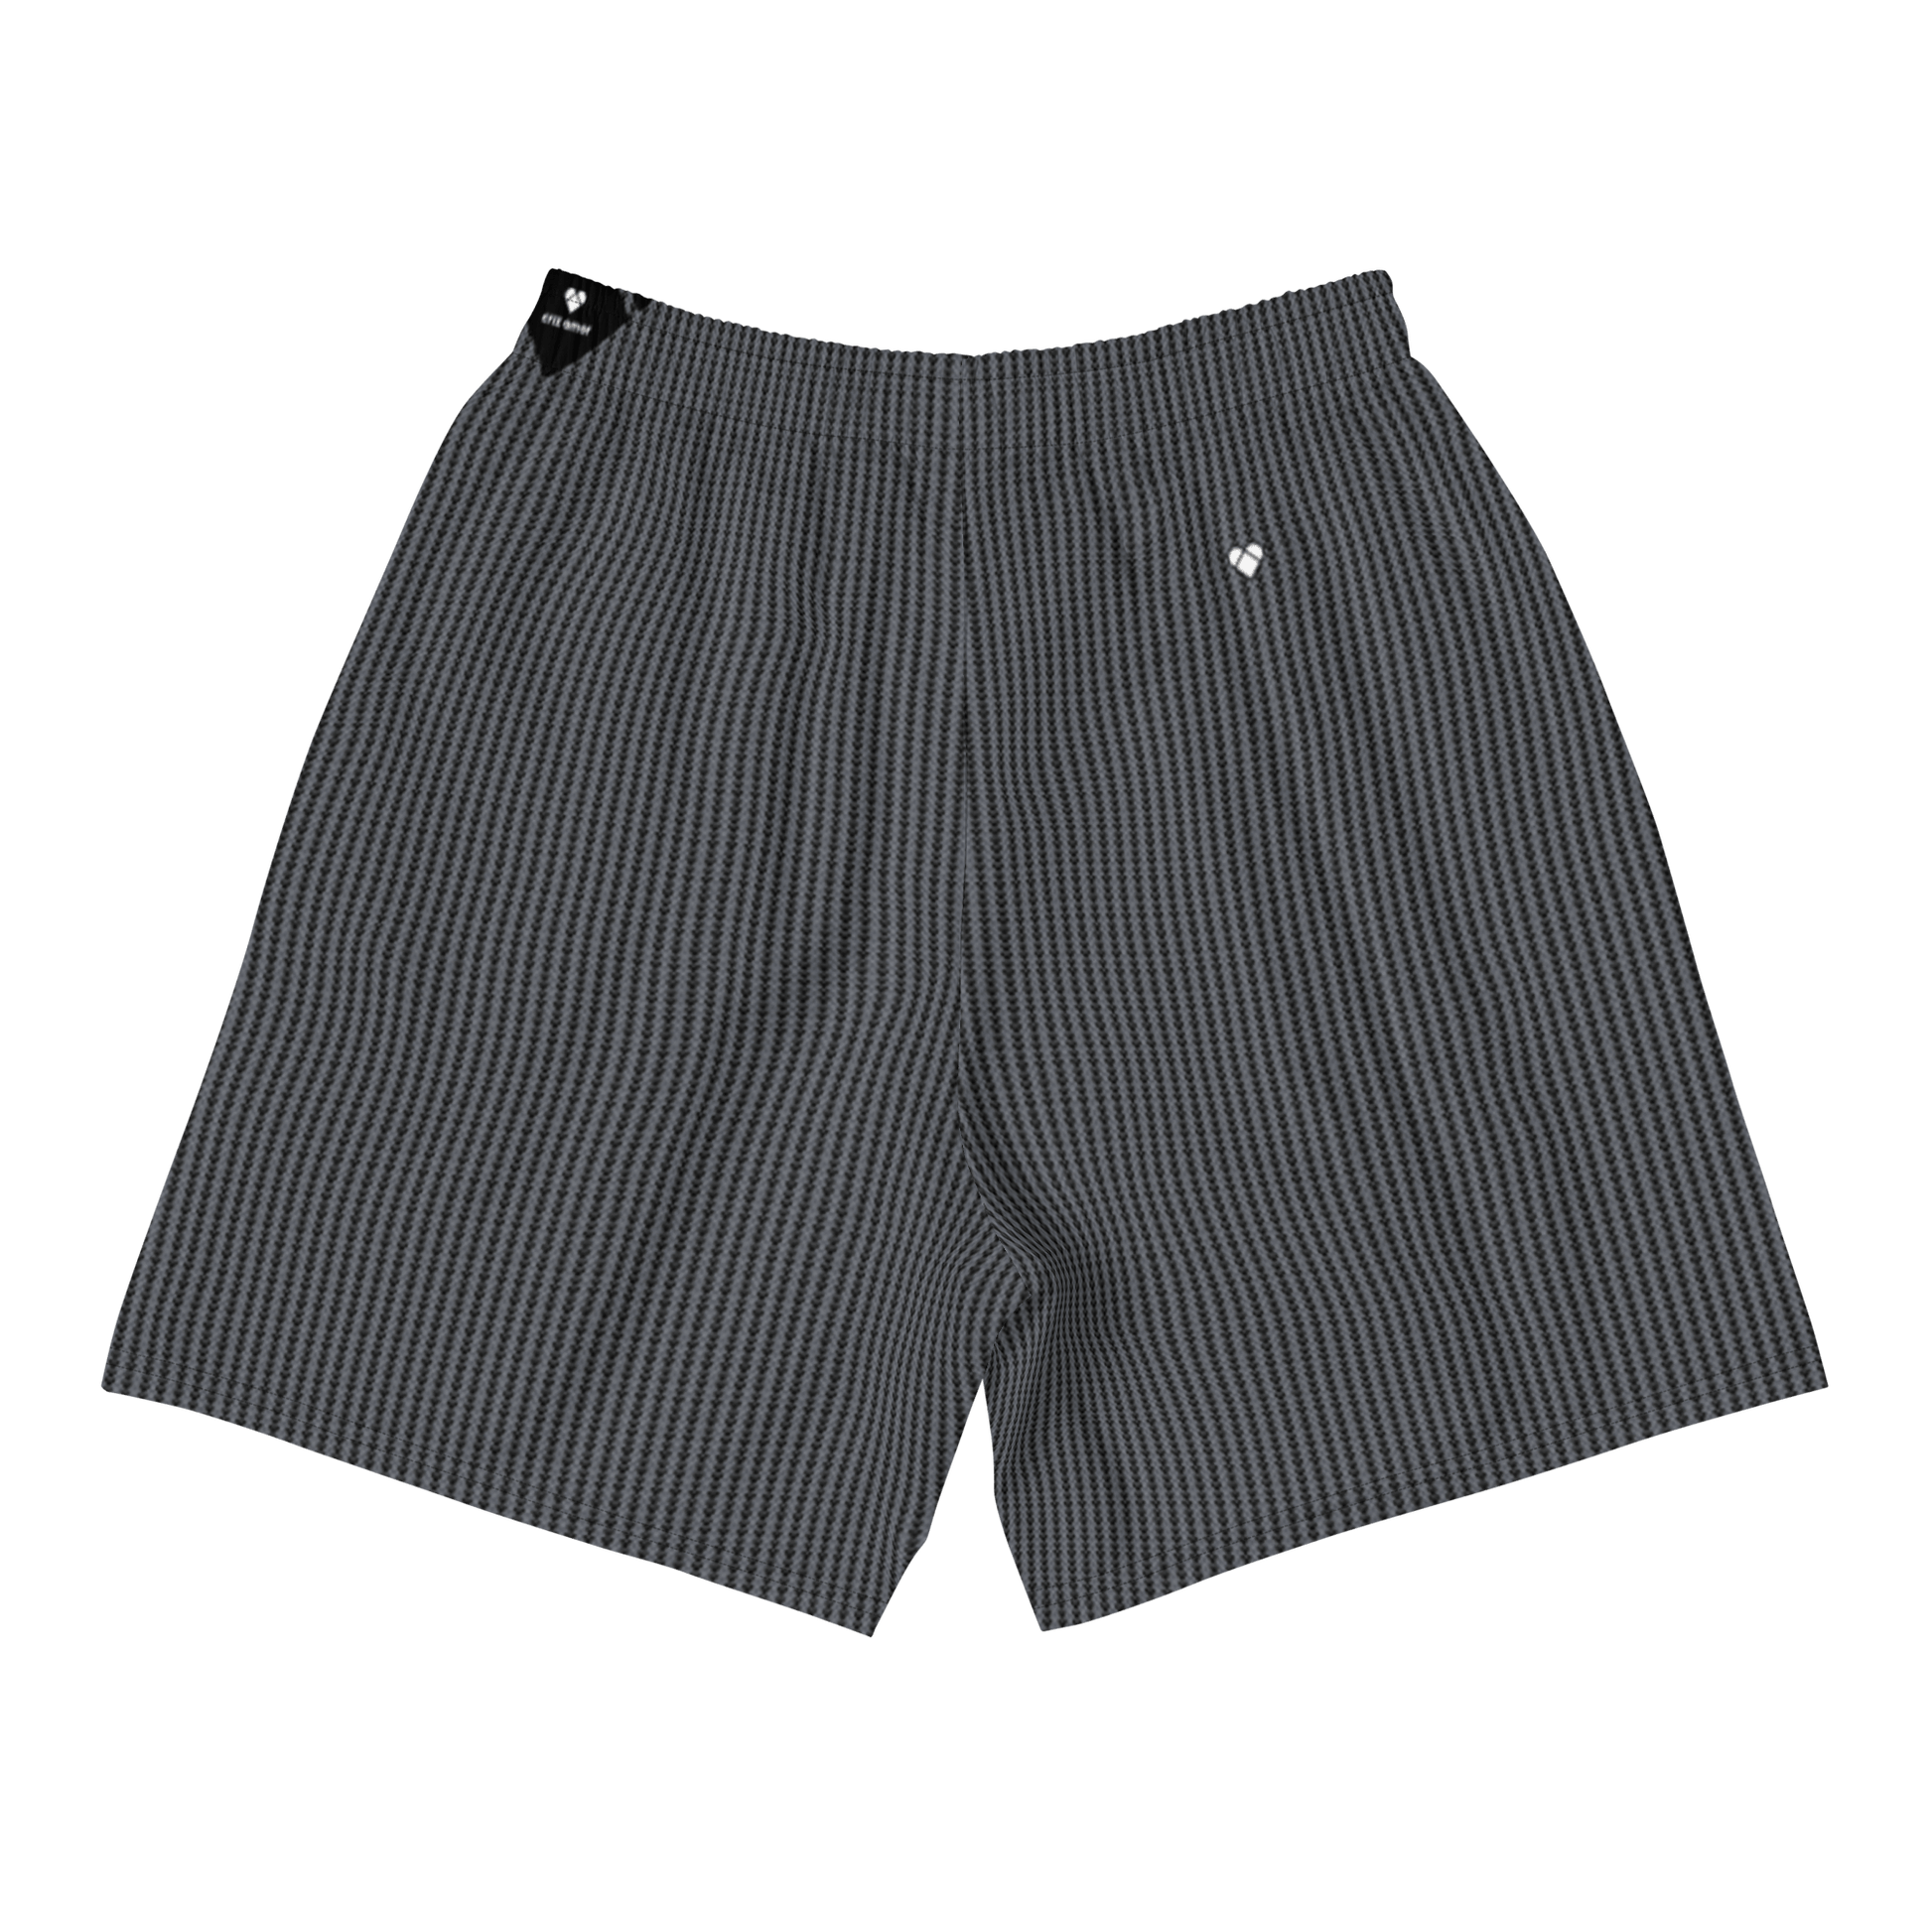 Distinctive Lovogram Pattern on Men's Black Shorts